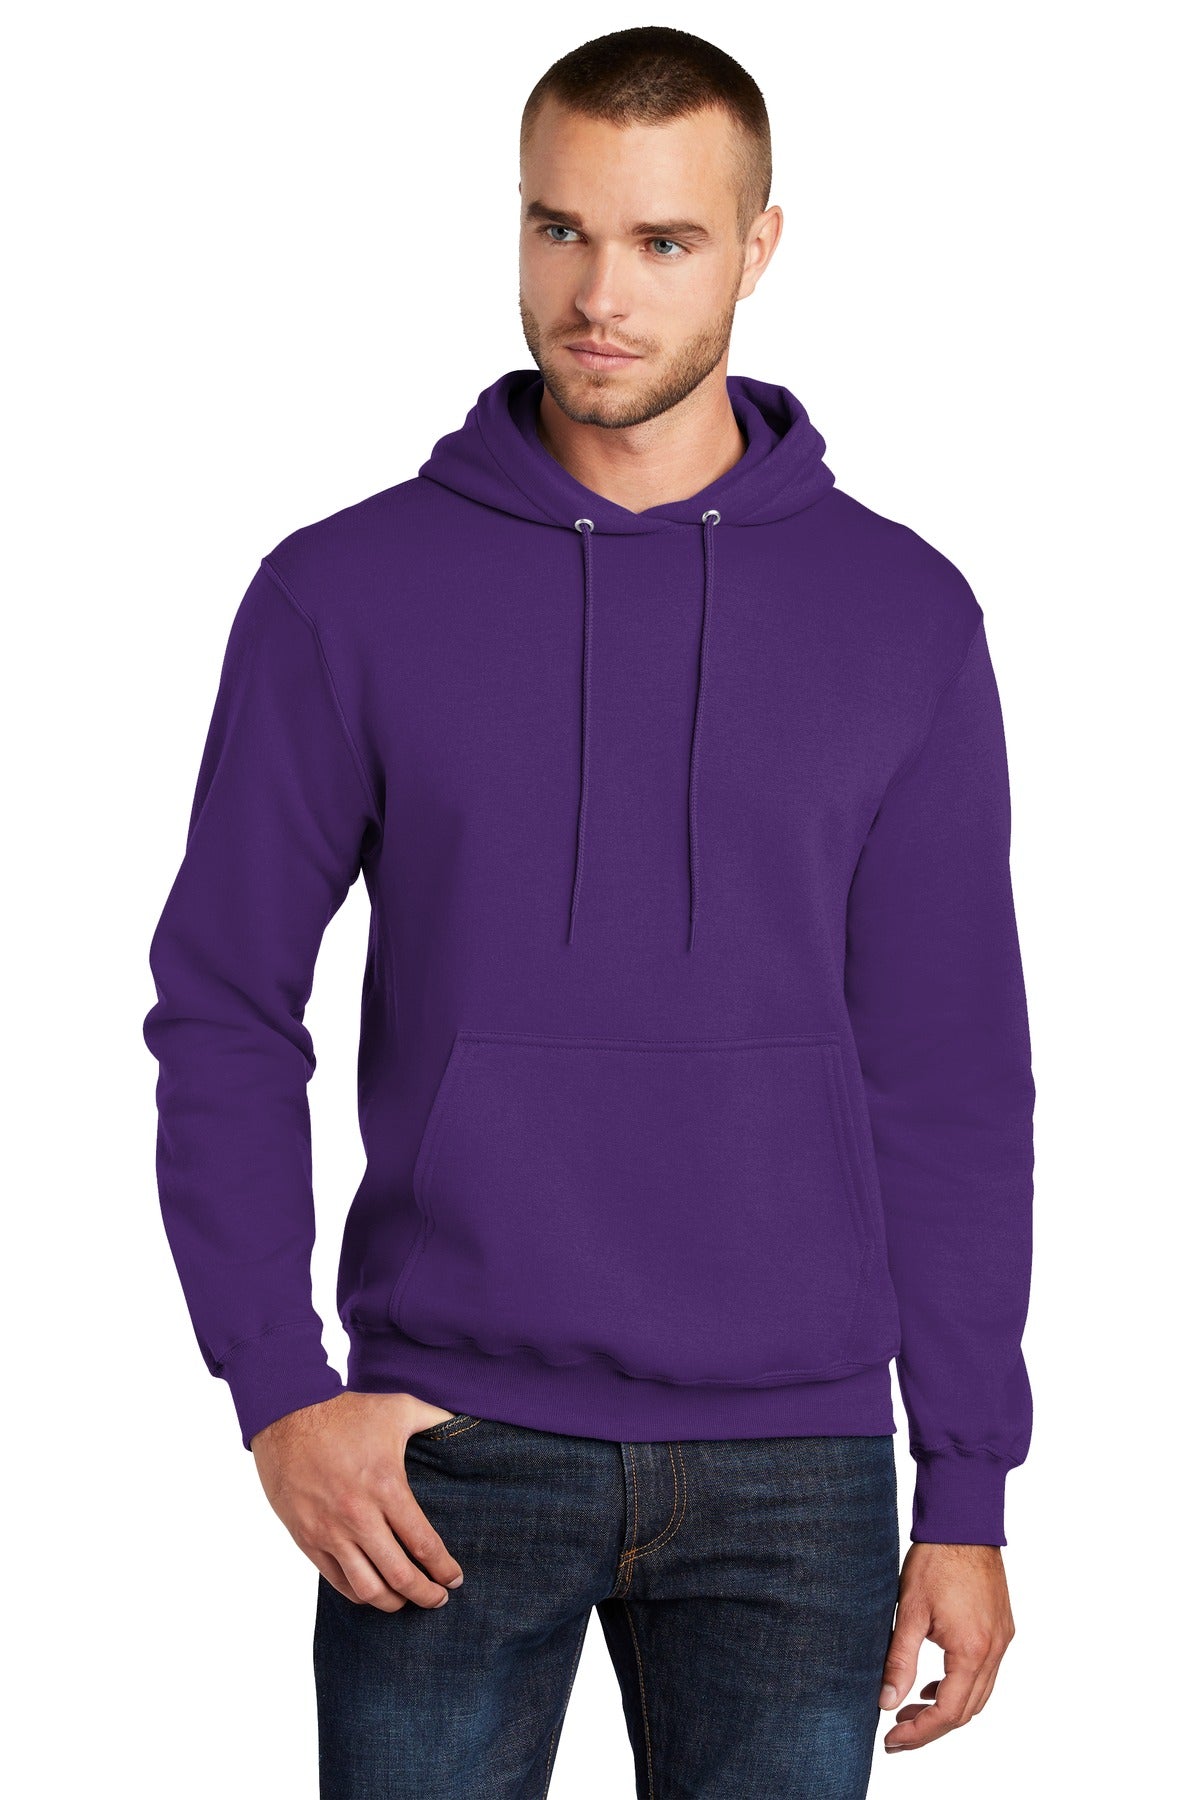 Sweatshirts/Fleece Team Purple Port & Company